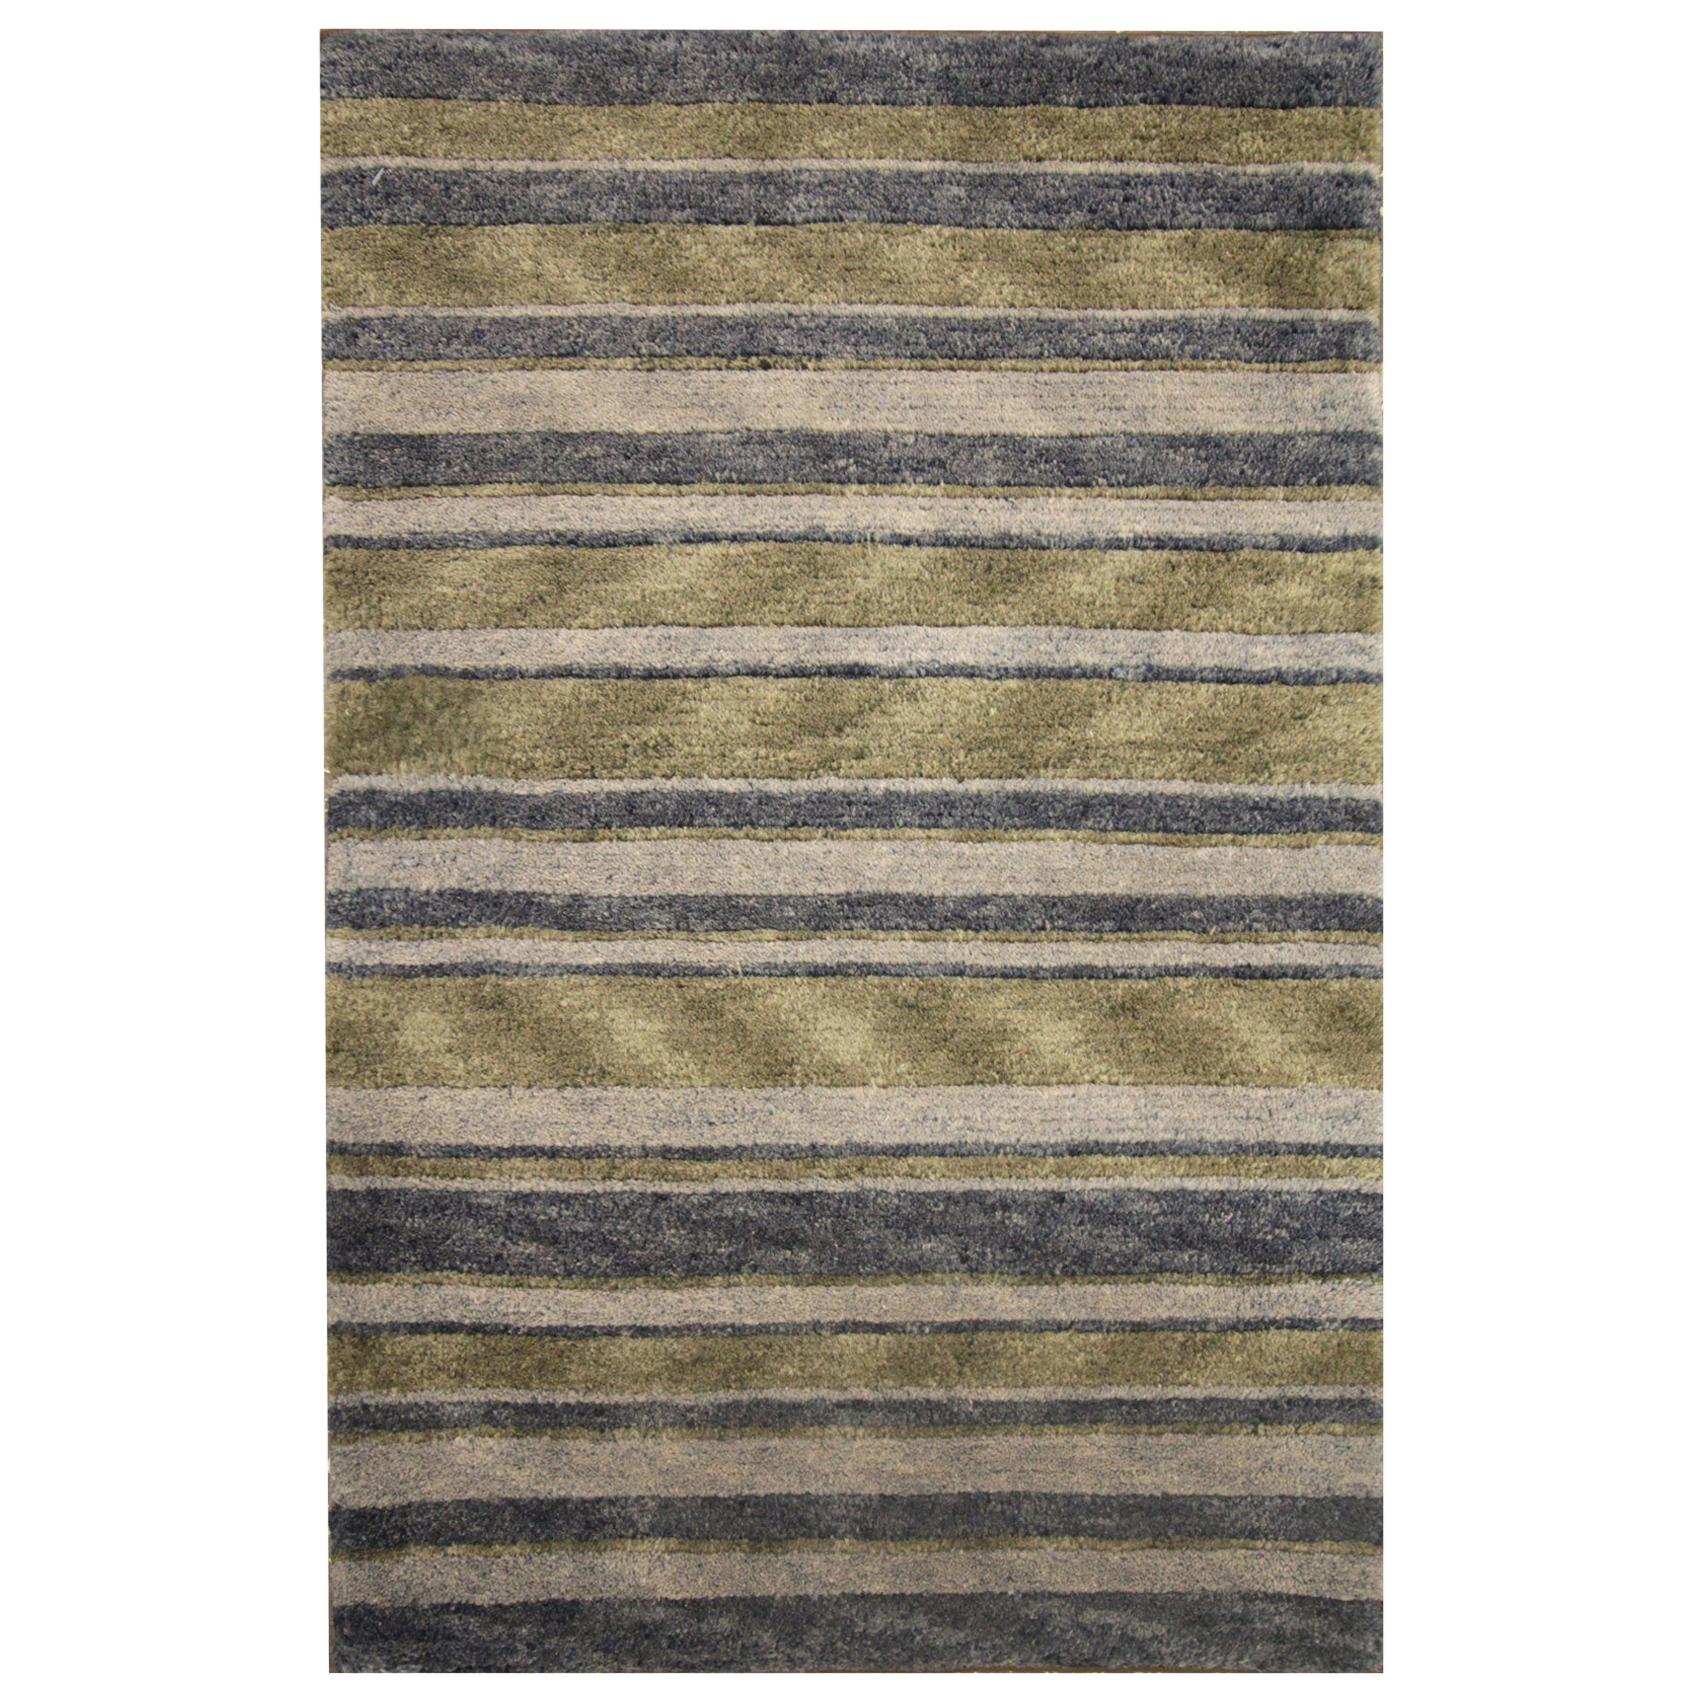 Handwoven Rug Small Modern Grey Striped Rug Wool Carpet Door Mat